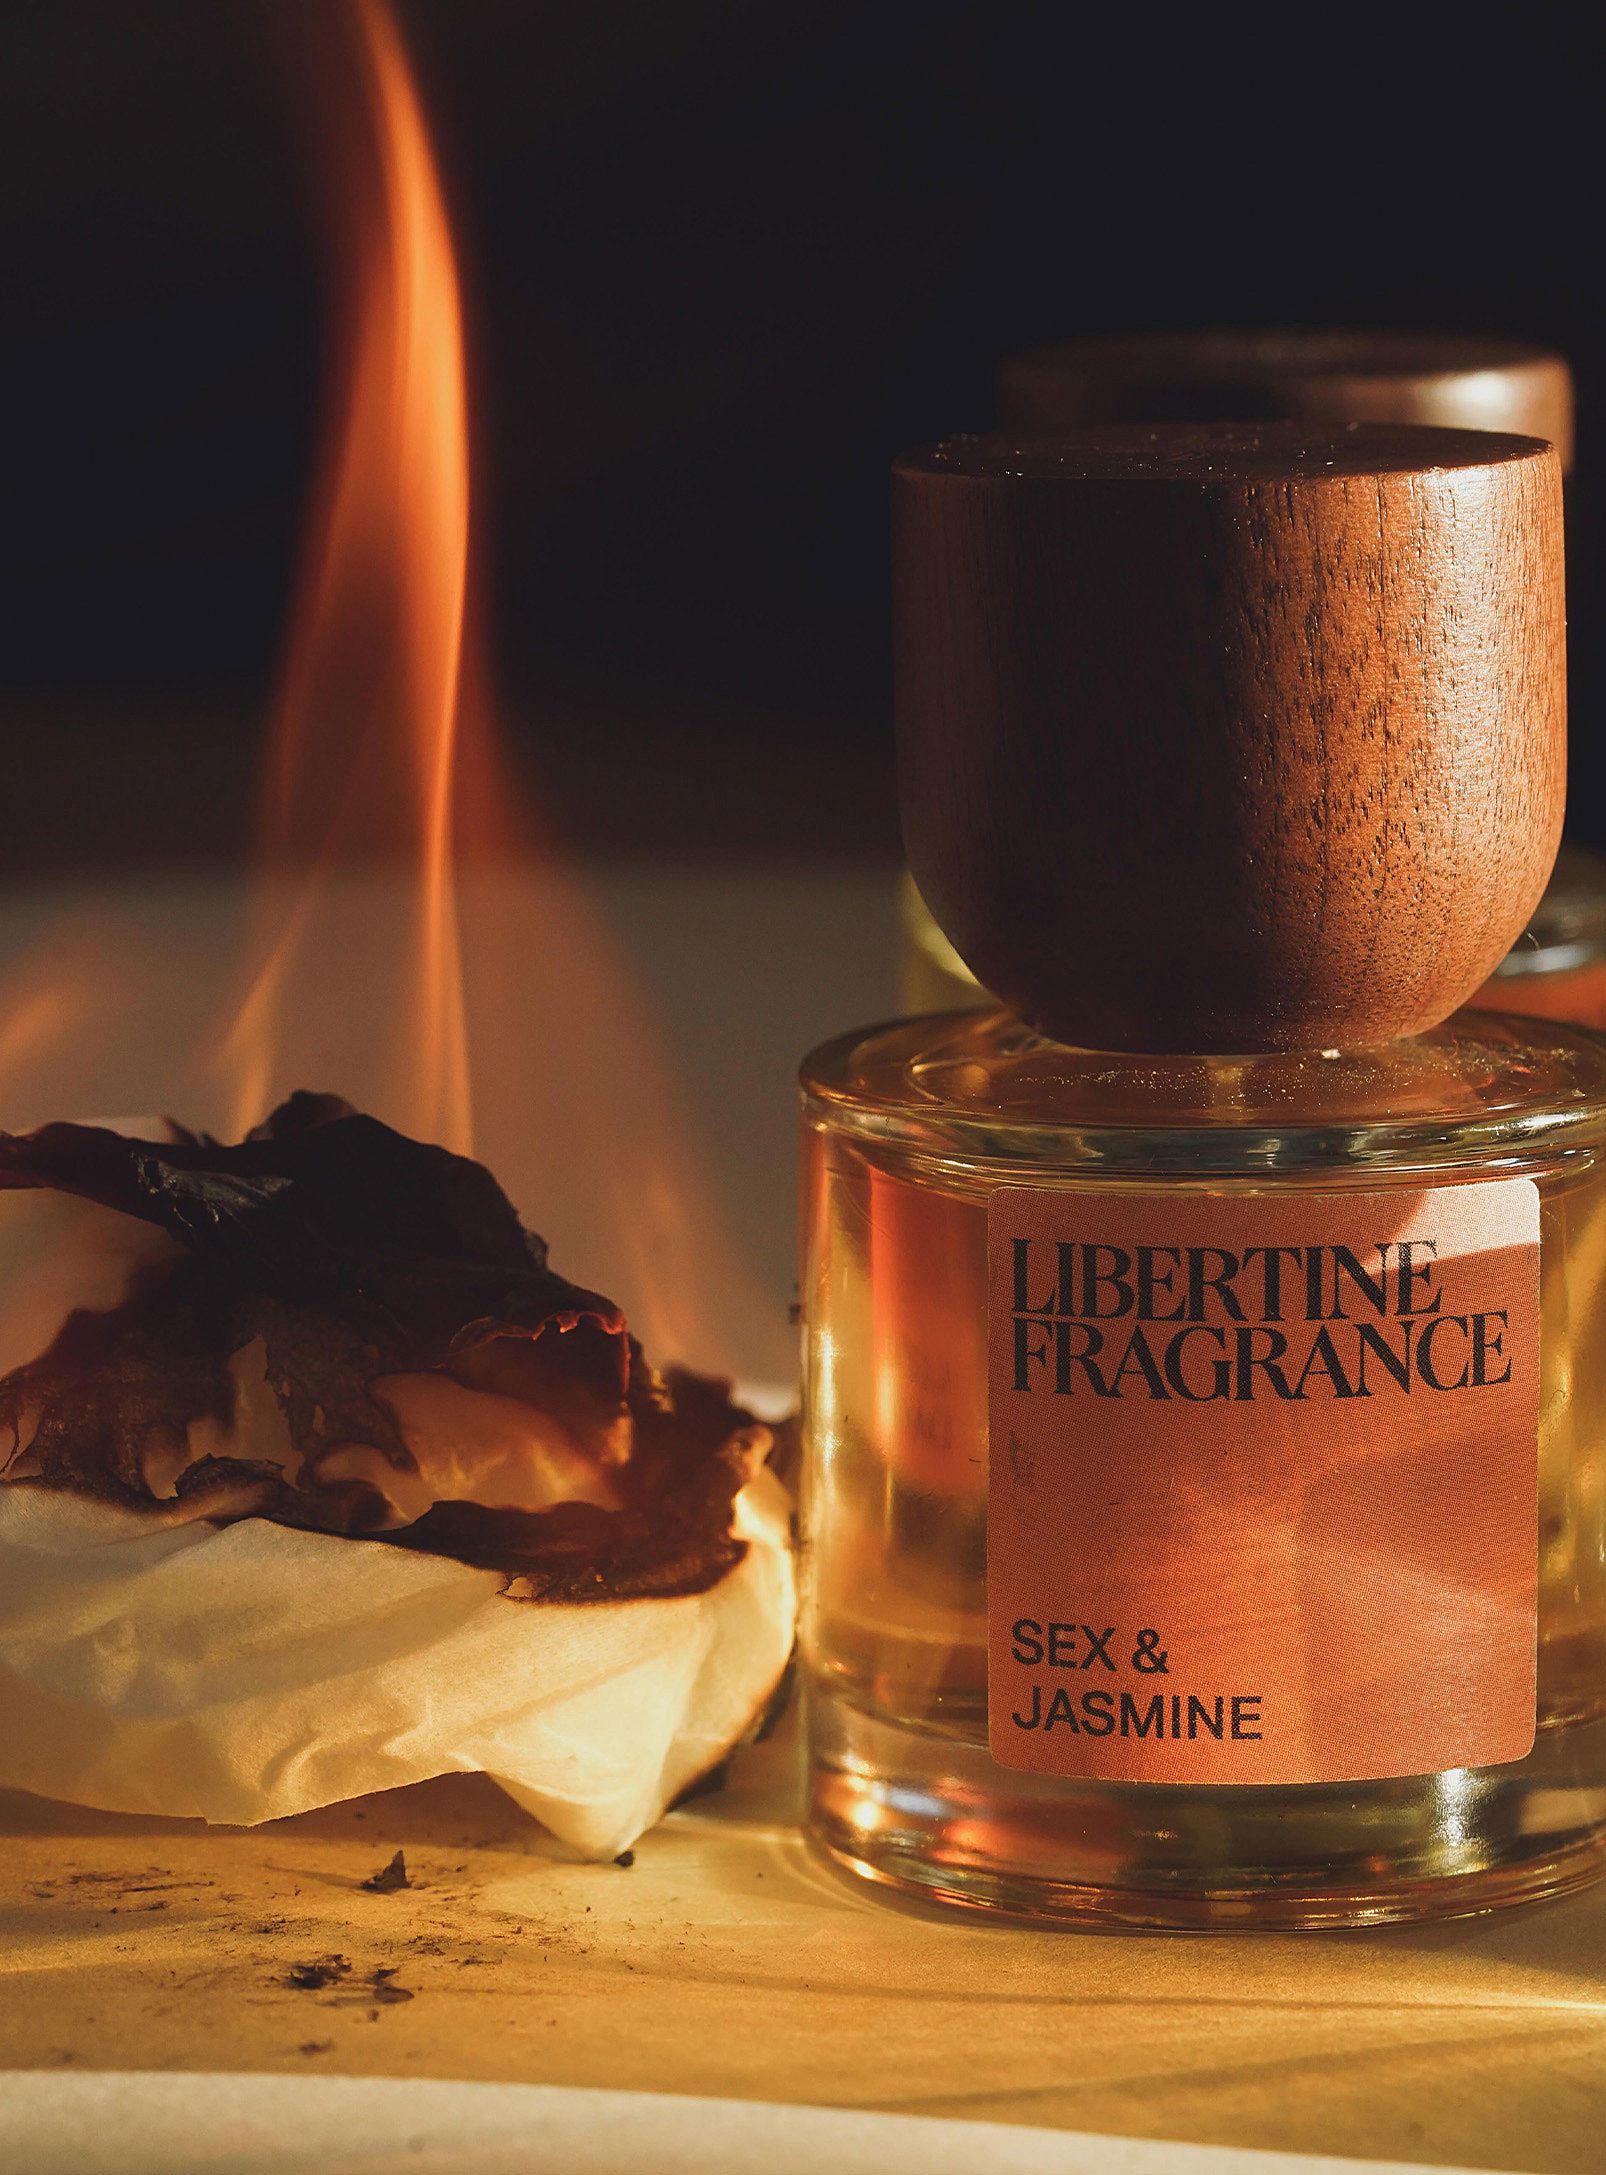 Libertine Fragrance - L'eau de parfum Sex  Jasmine